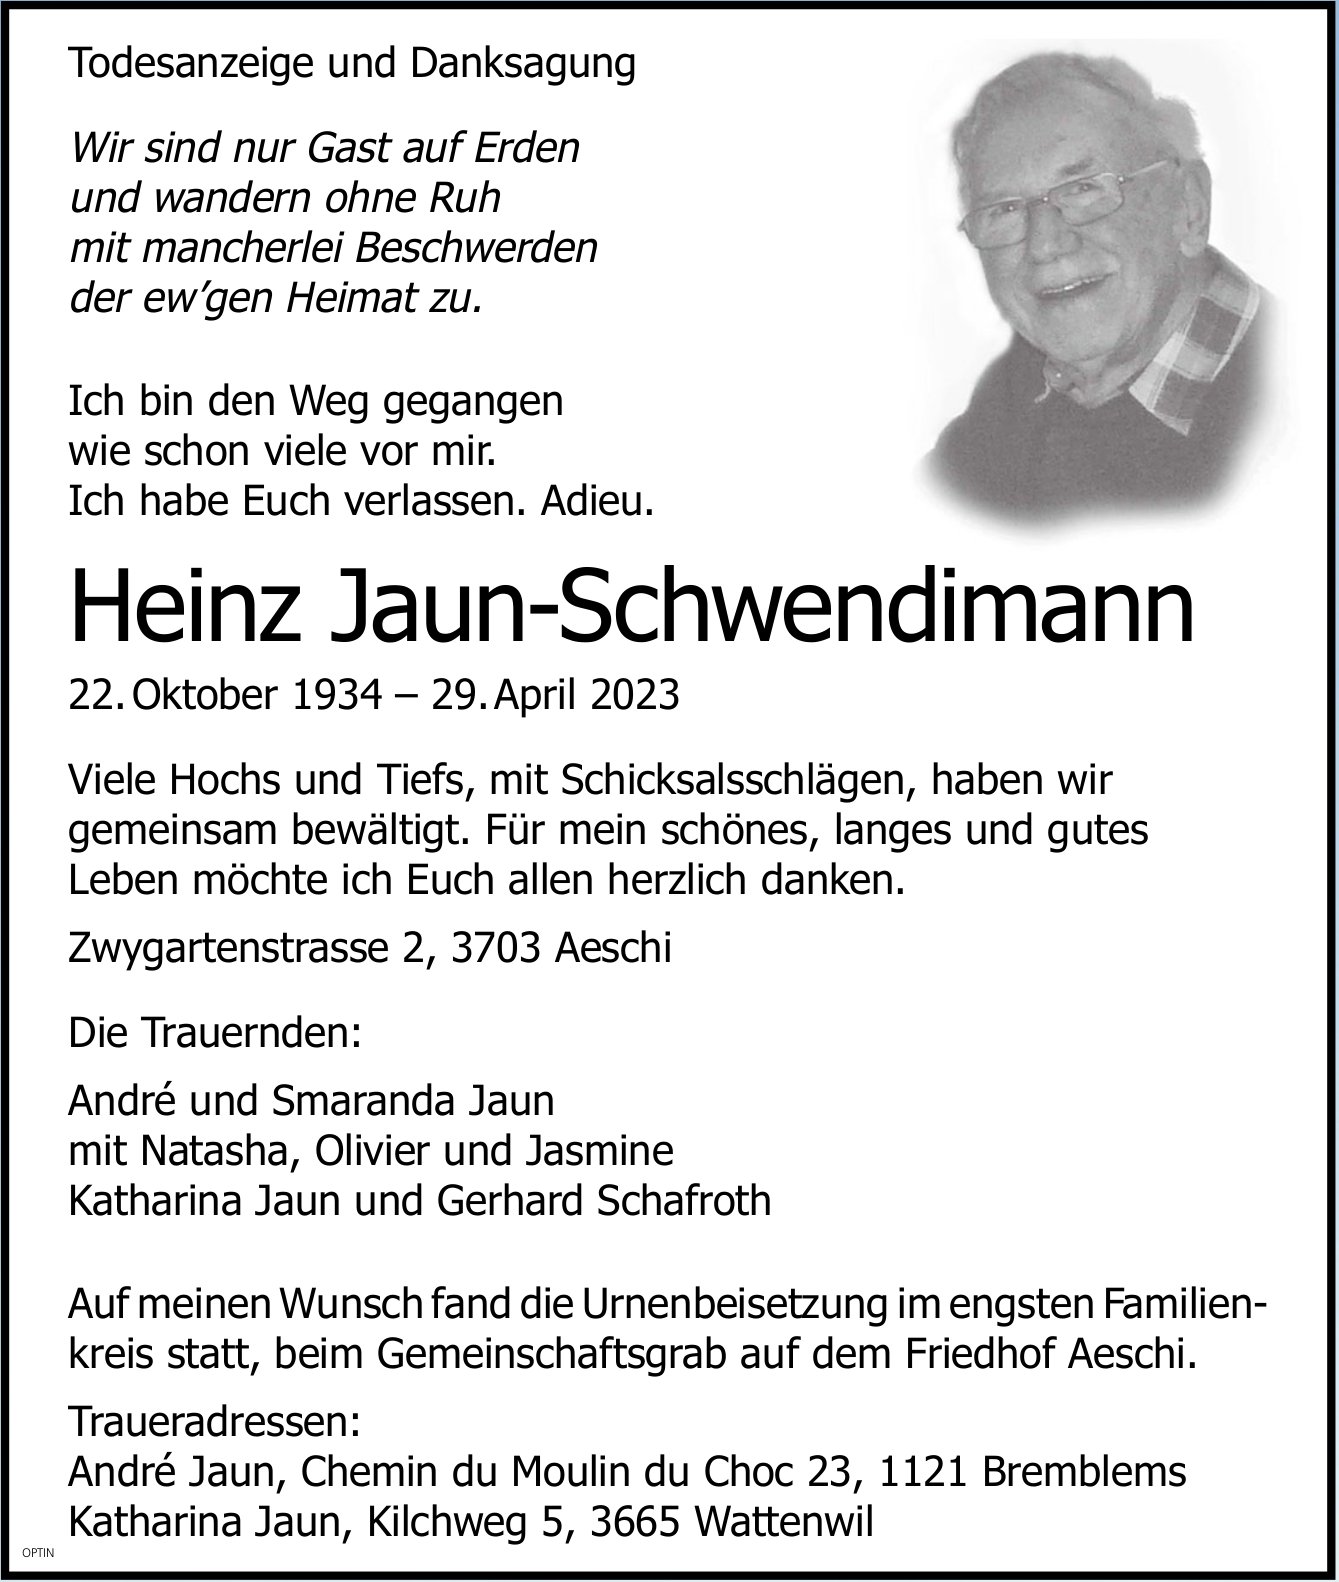 Heinz Jaun-Schwendimann, Mai 2023 / TA + DS